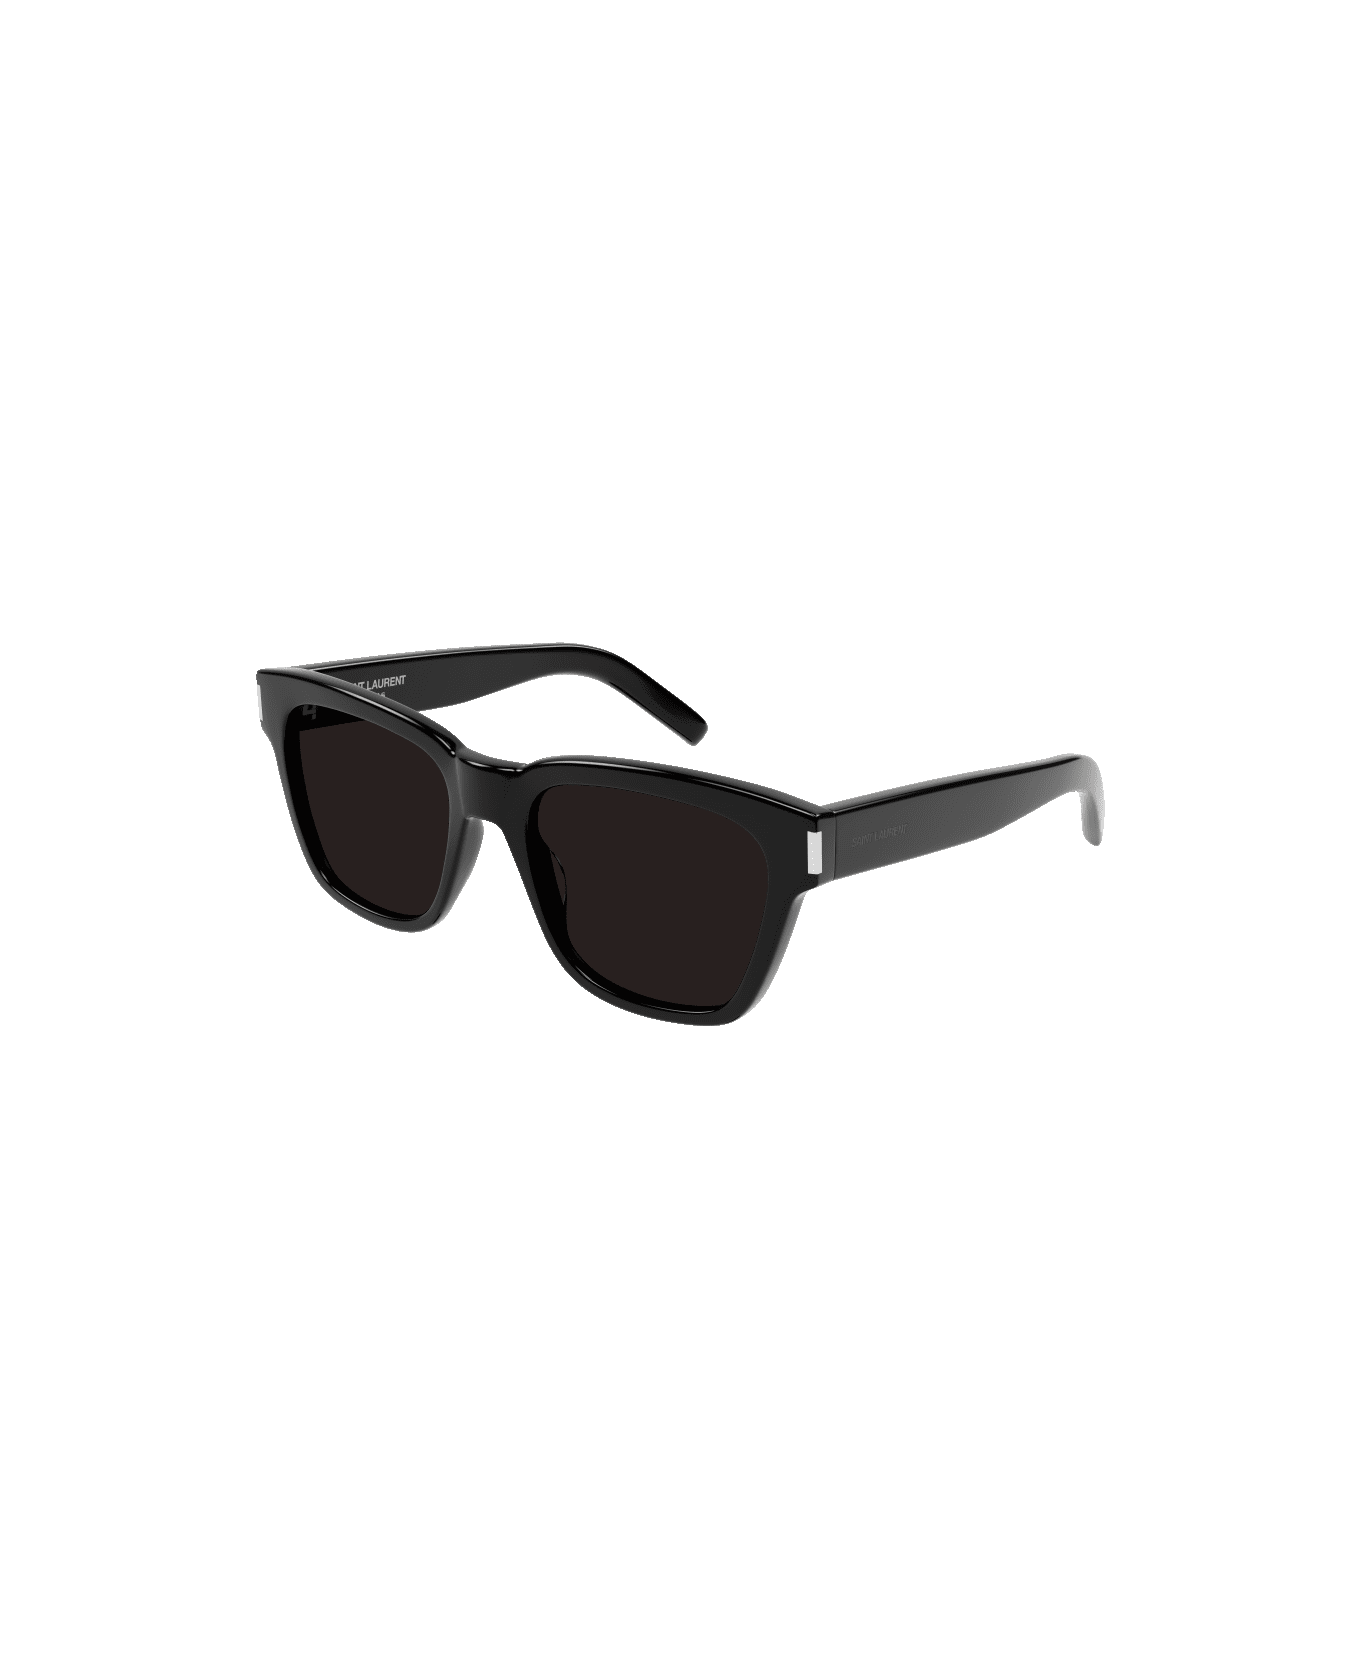 Saint Laurent Eyewear sl 560 001 Sunglasses サングラス